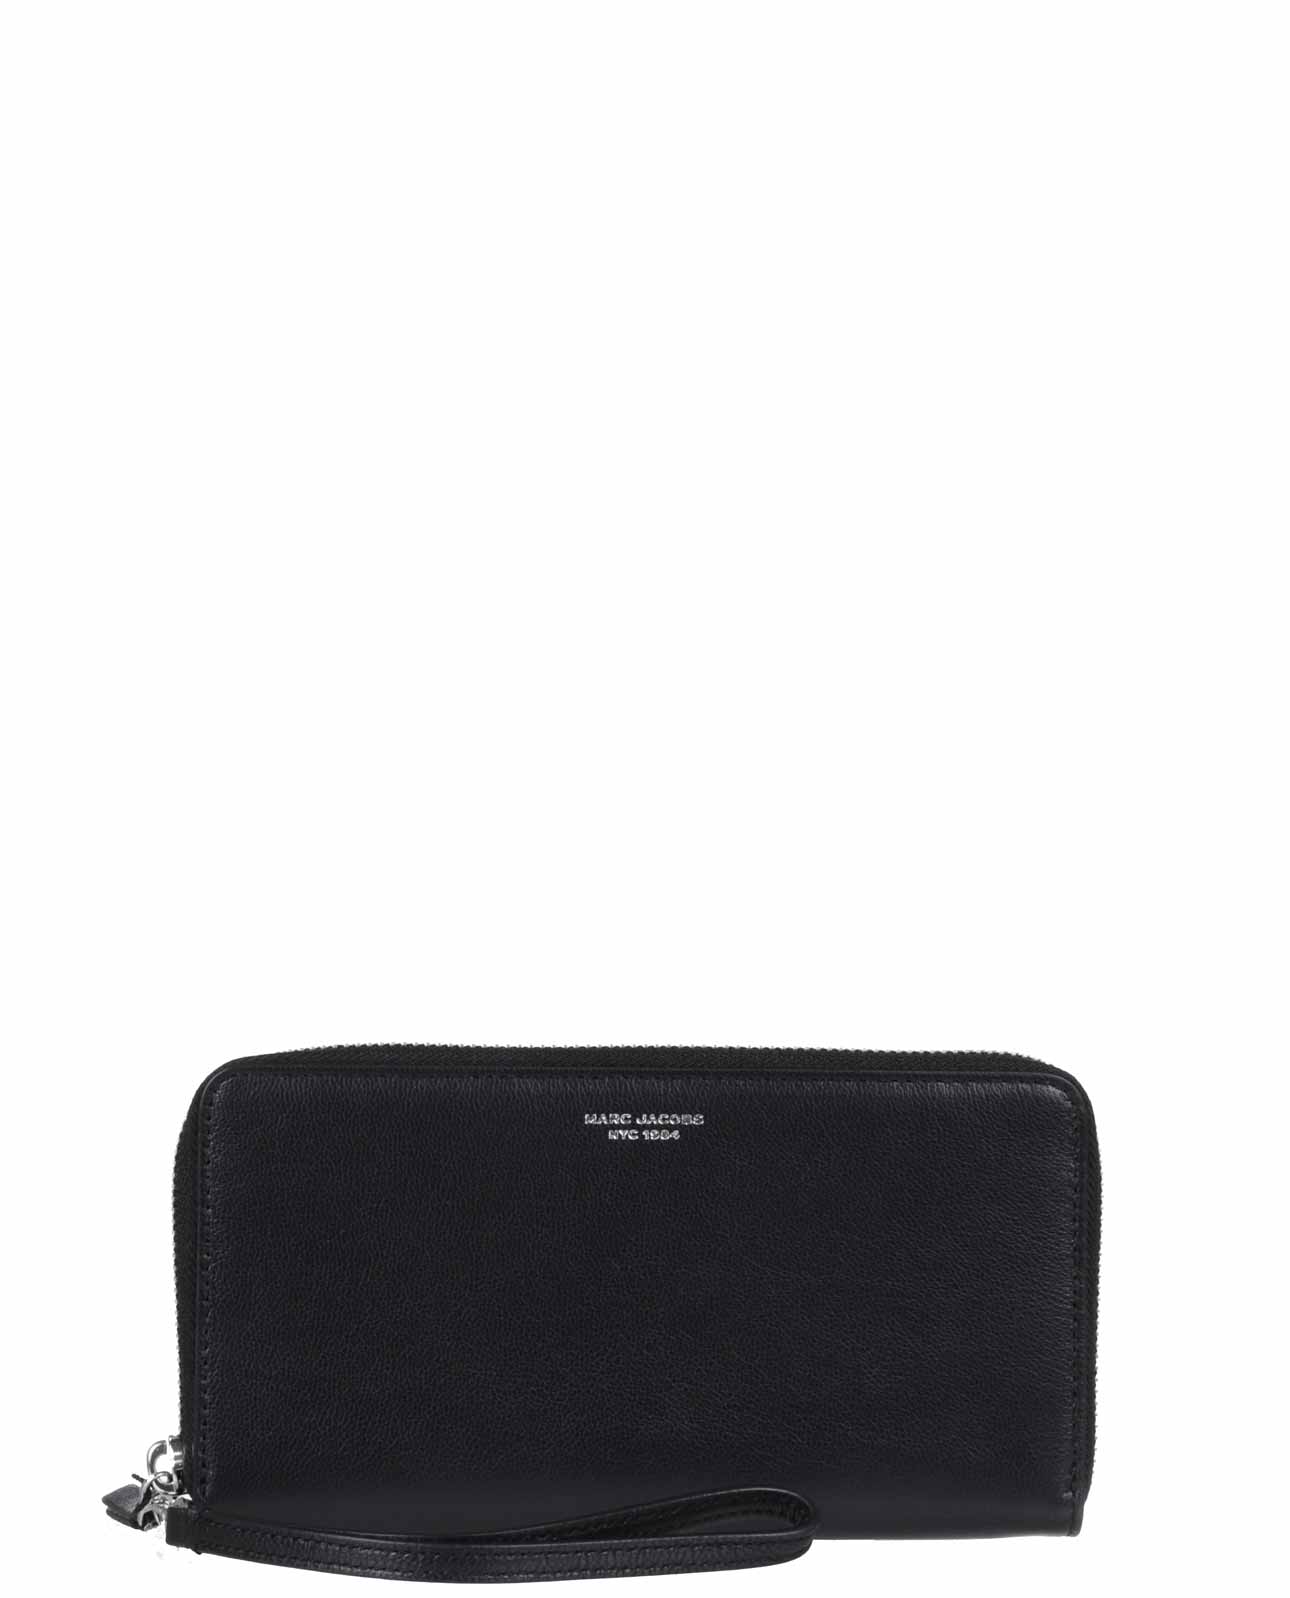 Marc Jacobs Black Continental Wristlet Wallet